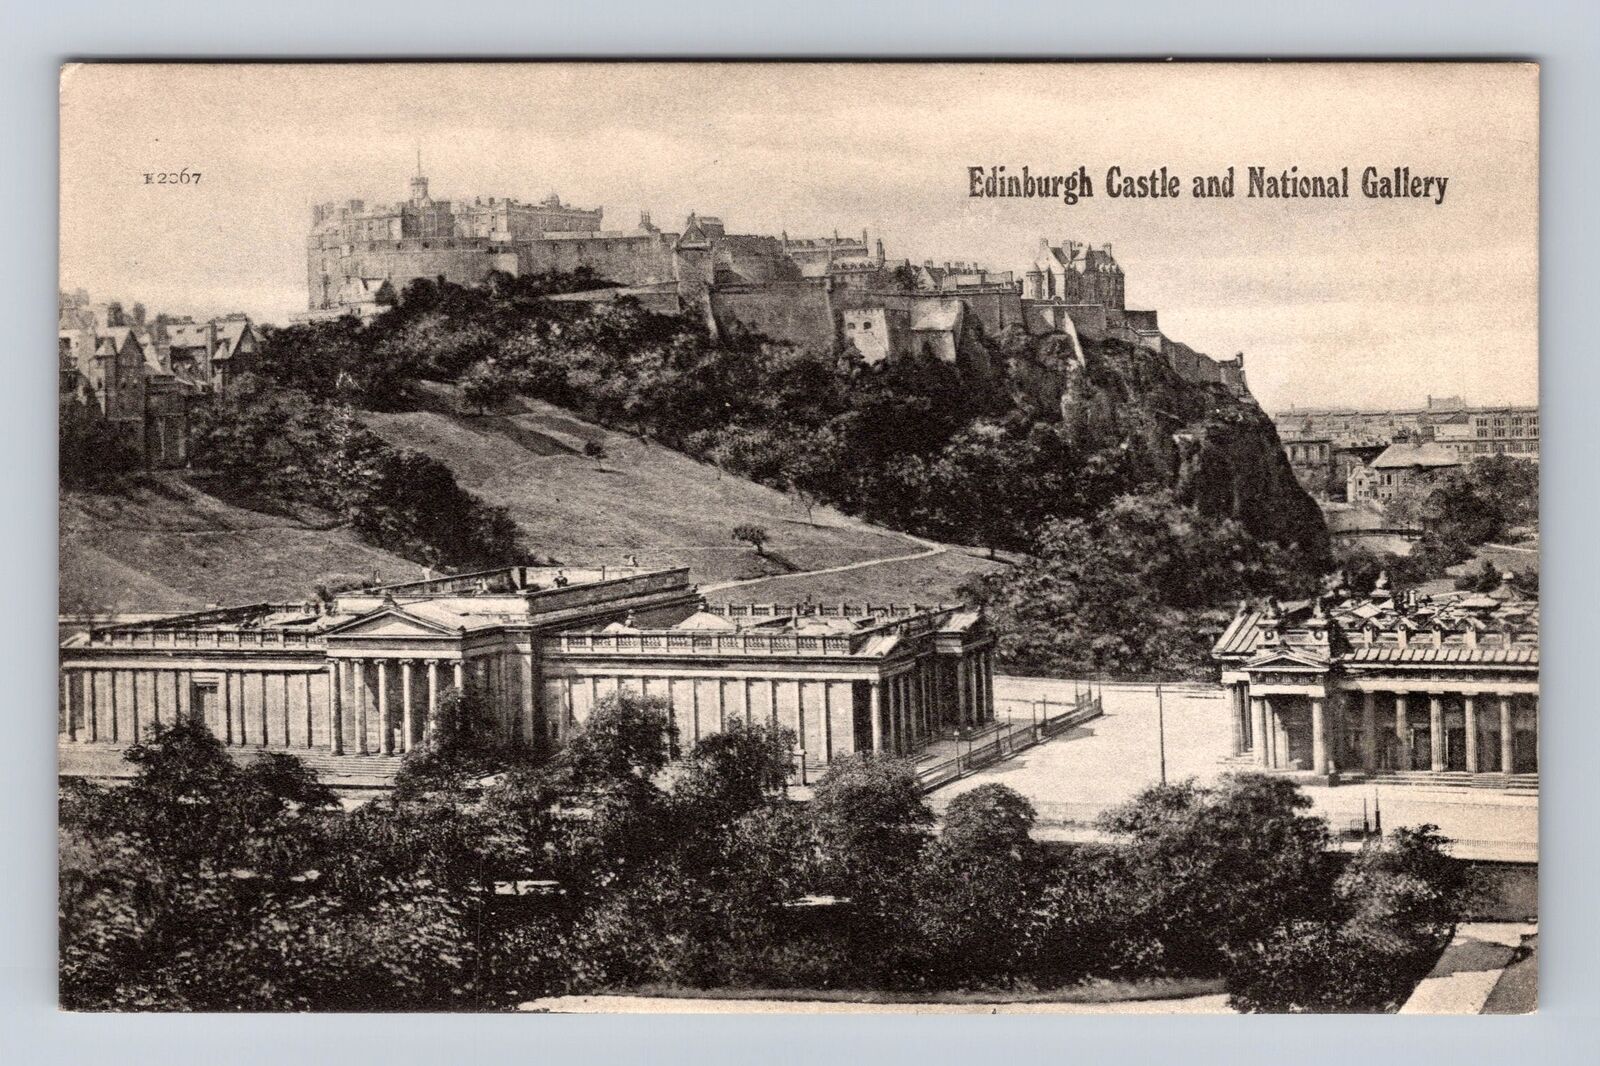 Edinburgh Scotland, Edinburgh Castle & National Gallery, Vintage Postcard